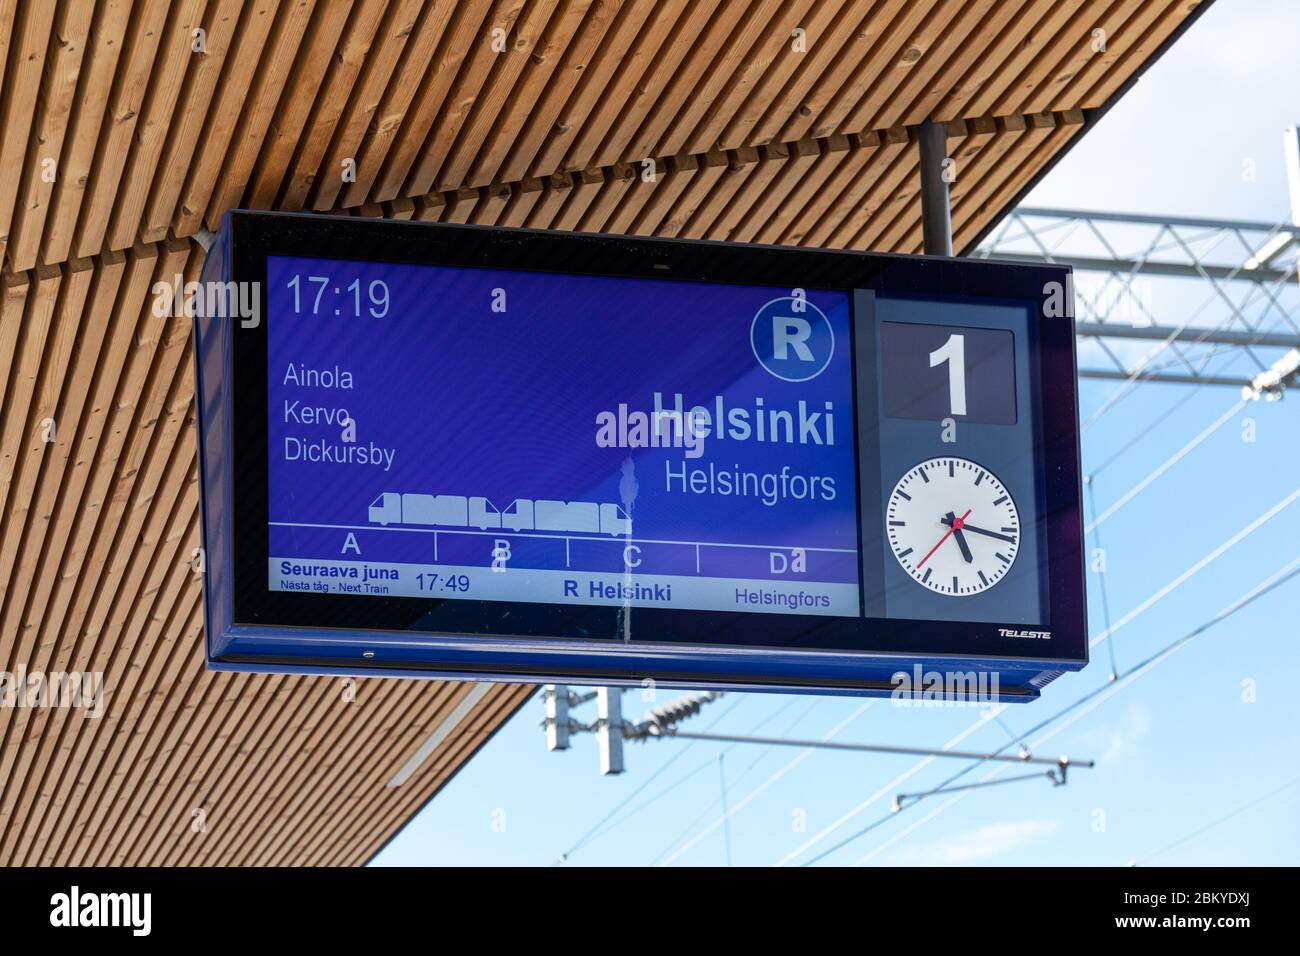 Passenger information display at Järvenpää railway station in Finland. Next R-train from Riihimäki to Helsinki. Stock Photo